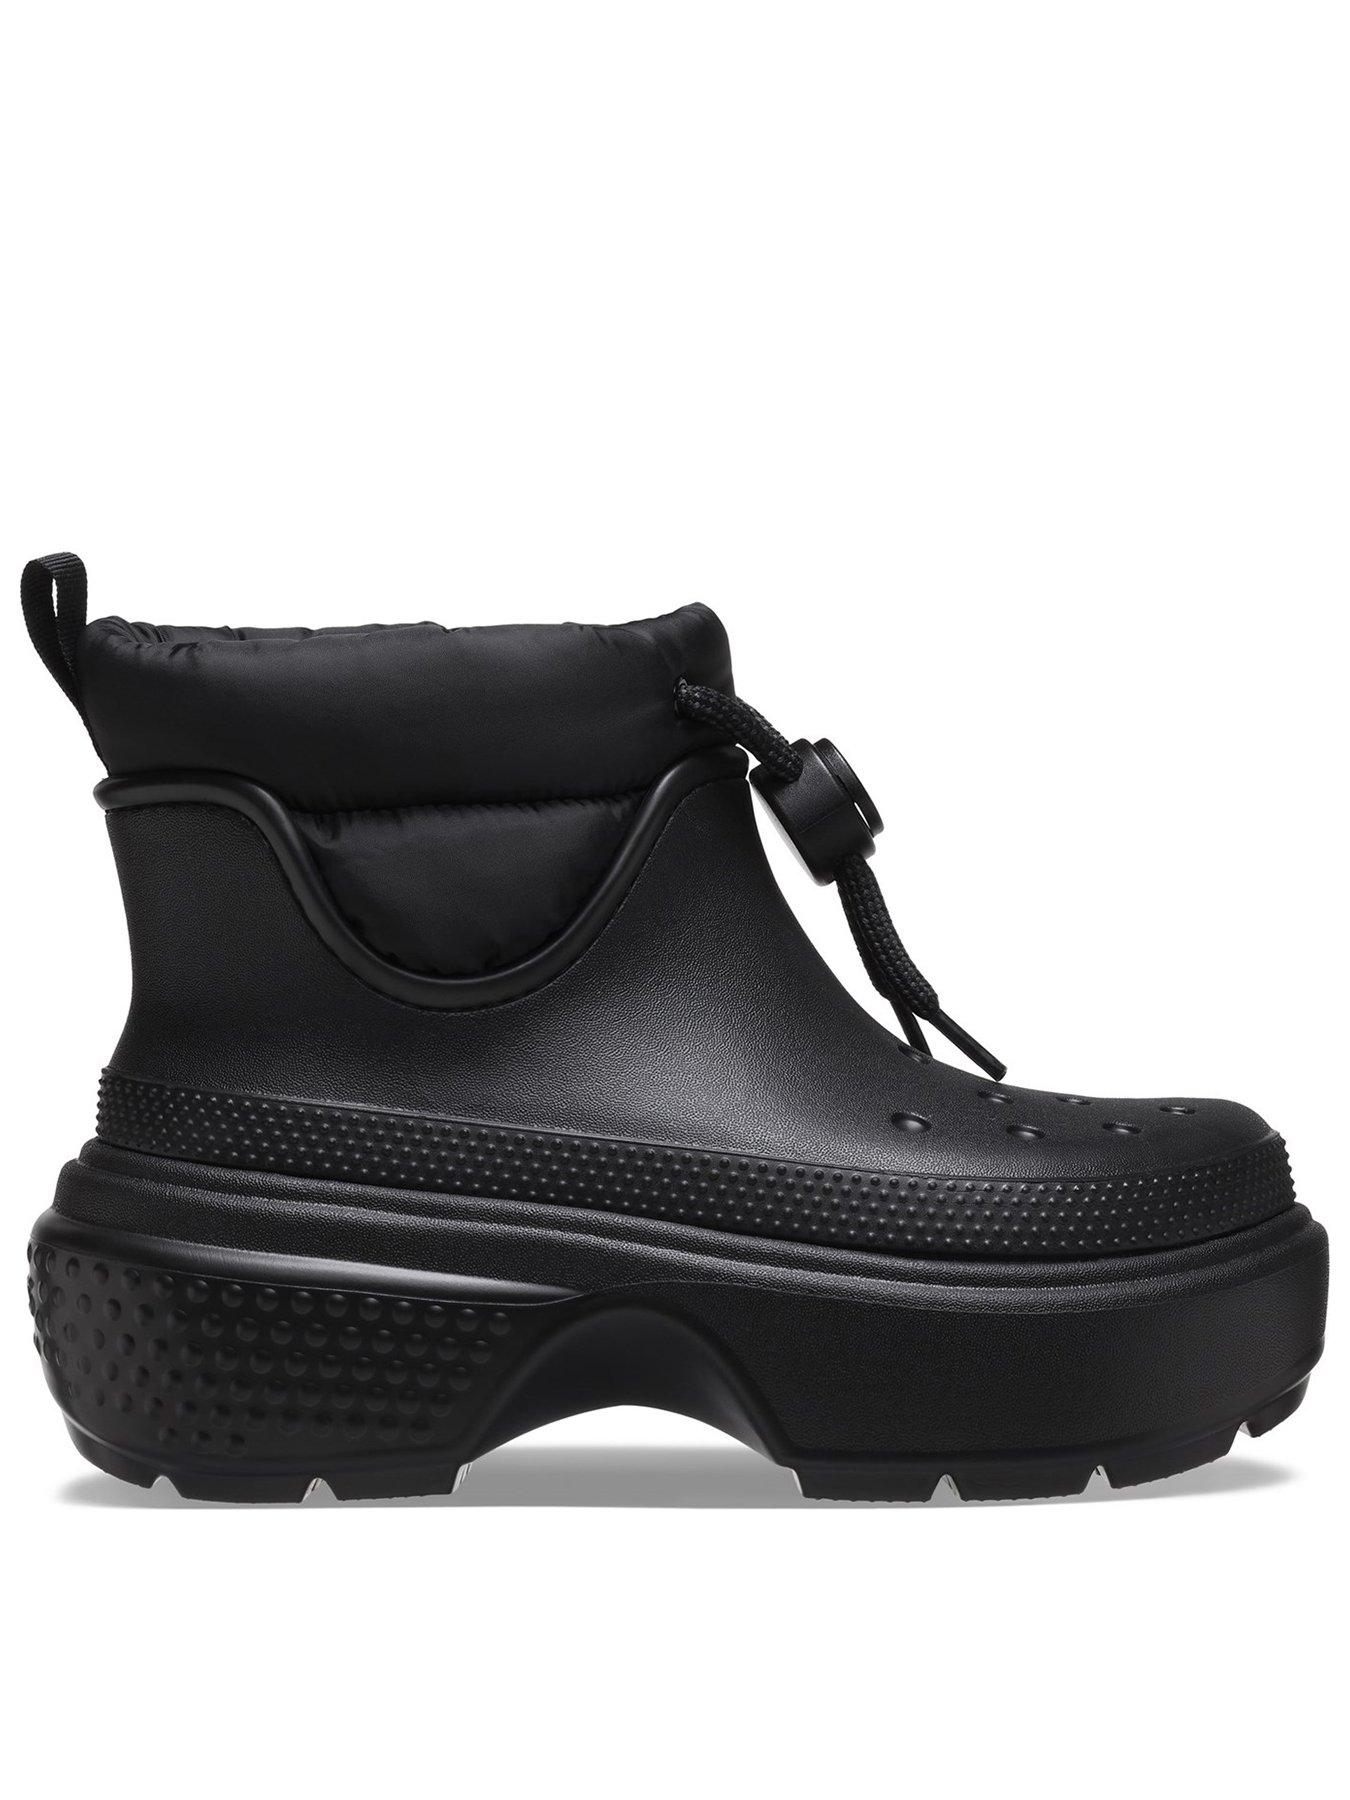 Crocs Stomp Puff Boot - Black, Black, Size 6, Women